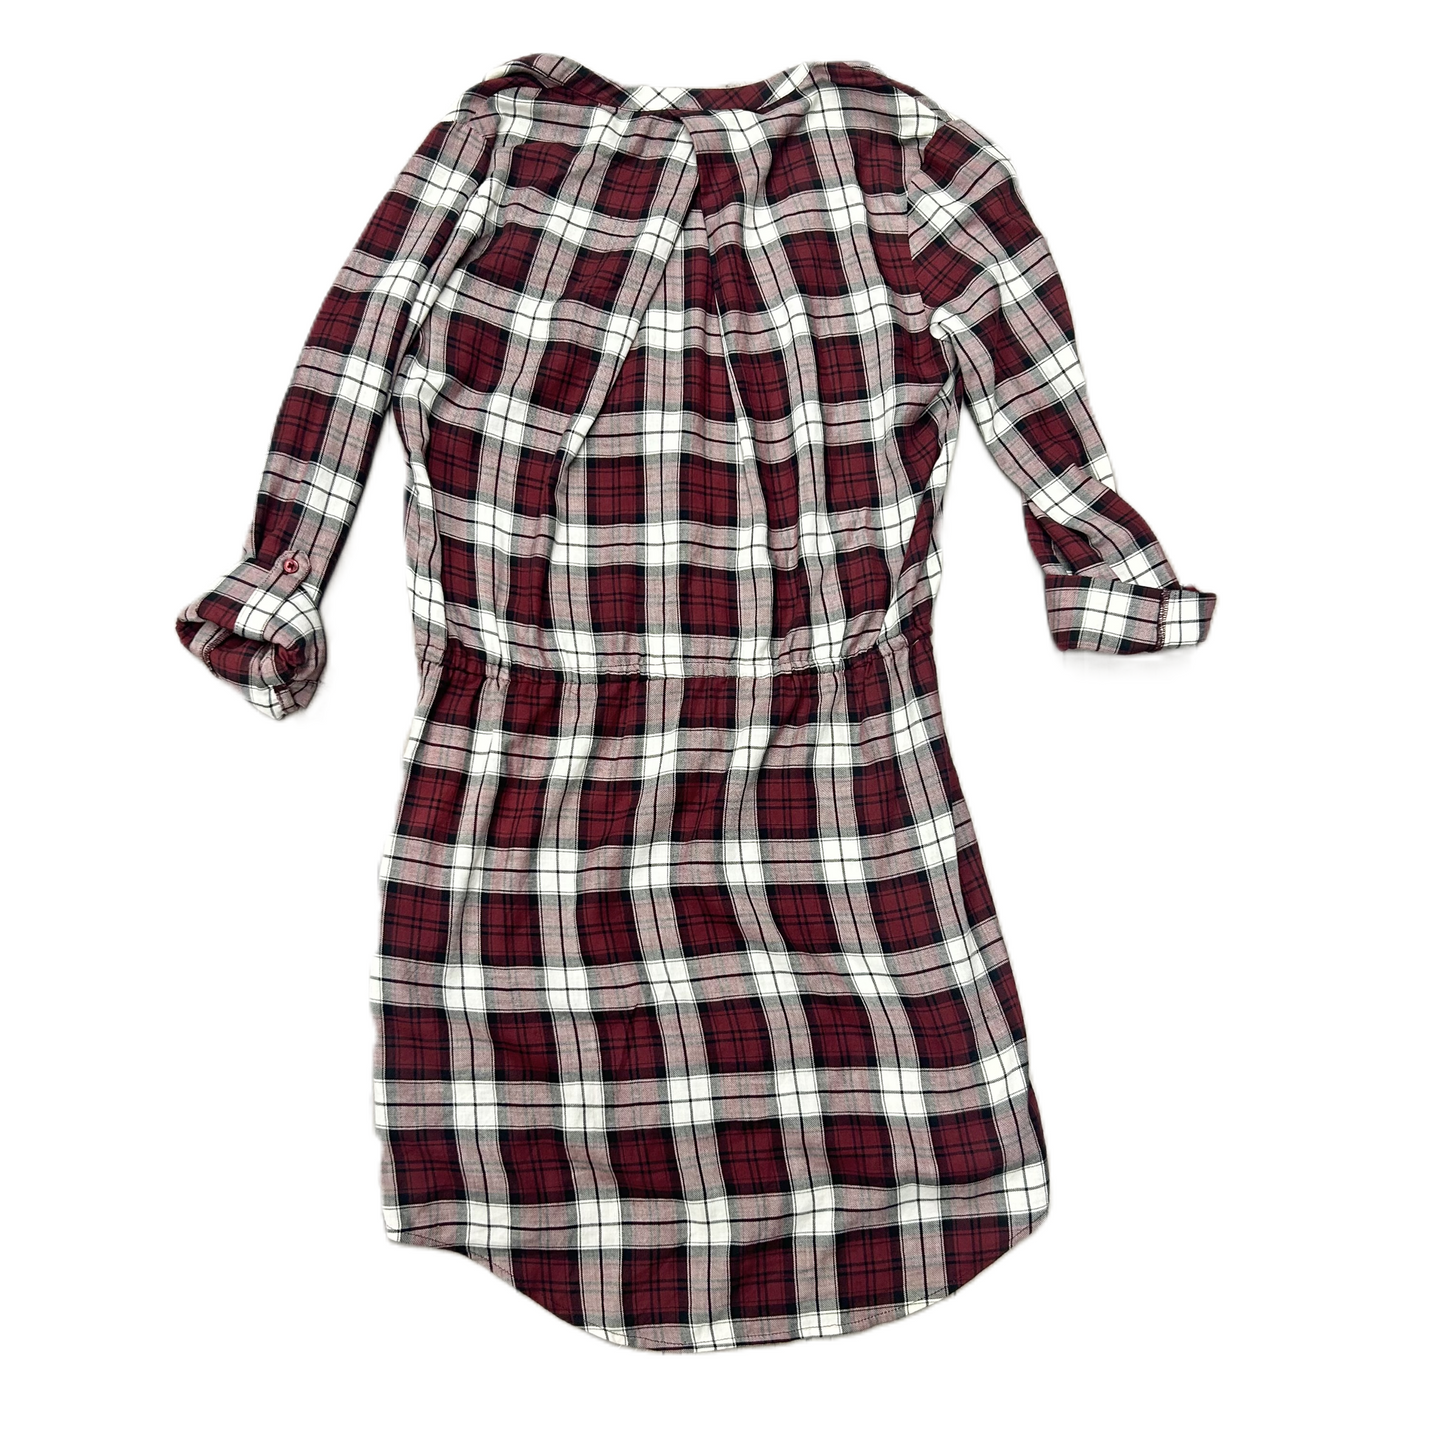 Plaid Dress Casual Short By Joie, Size: Xxs